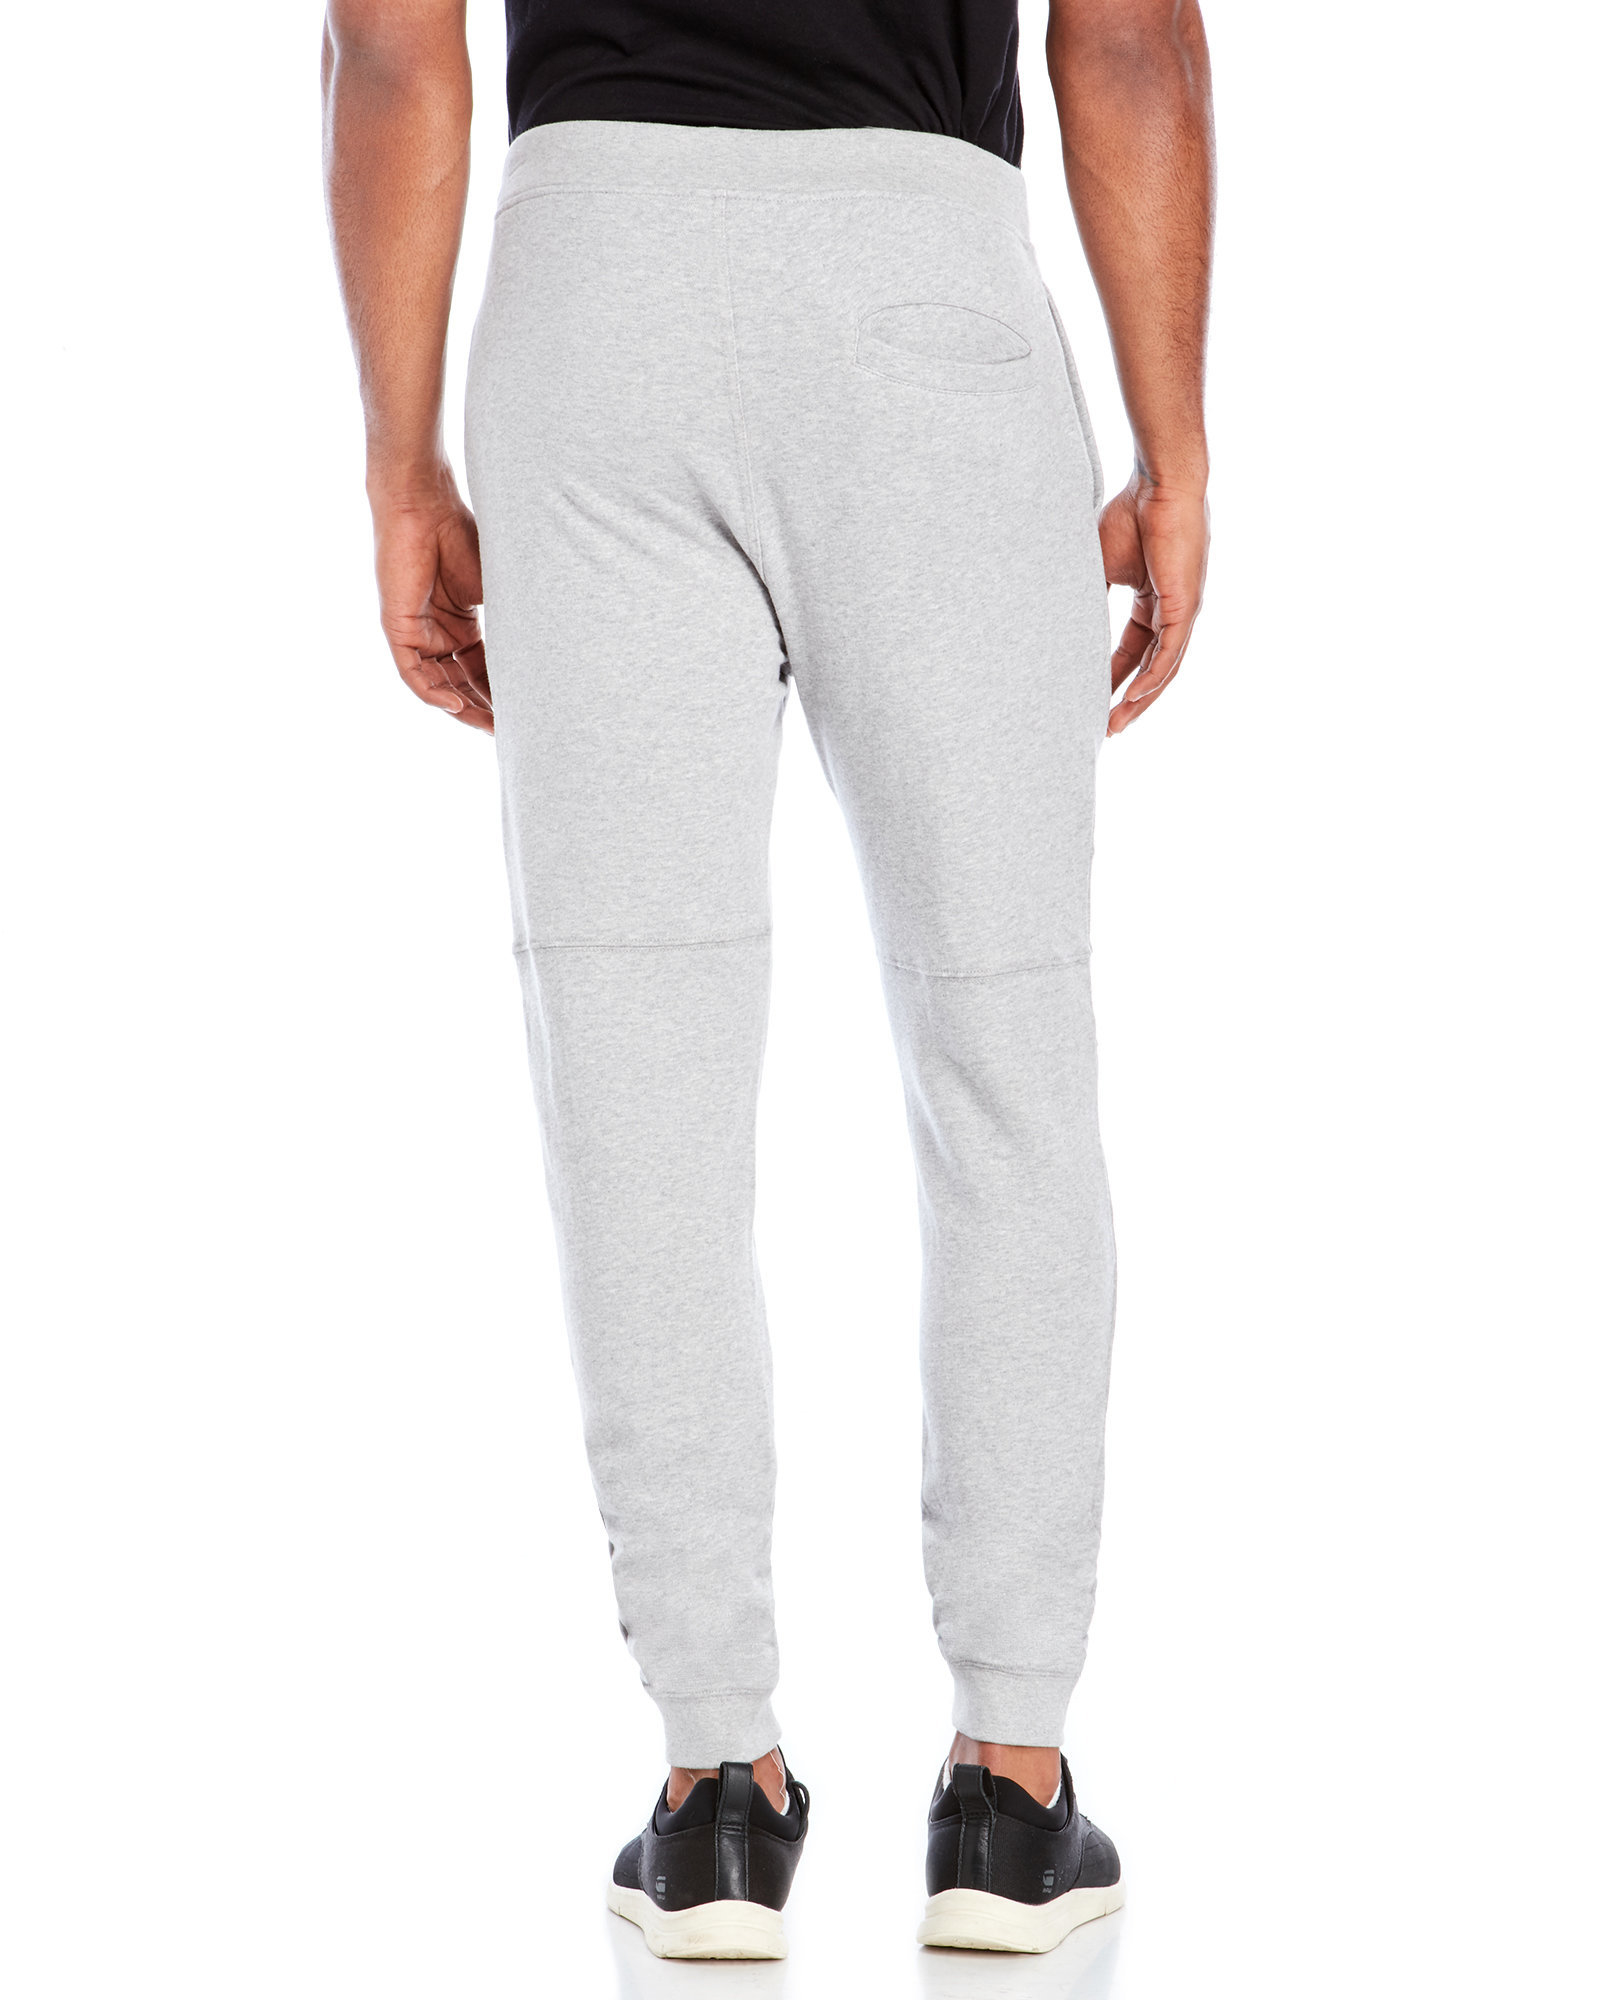 Lyst - BBCICECREAM 8Am Sweatpants in Gray for Men